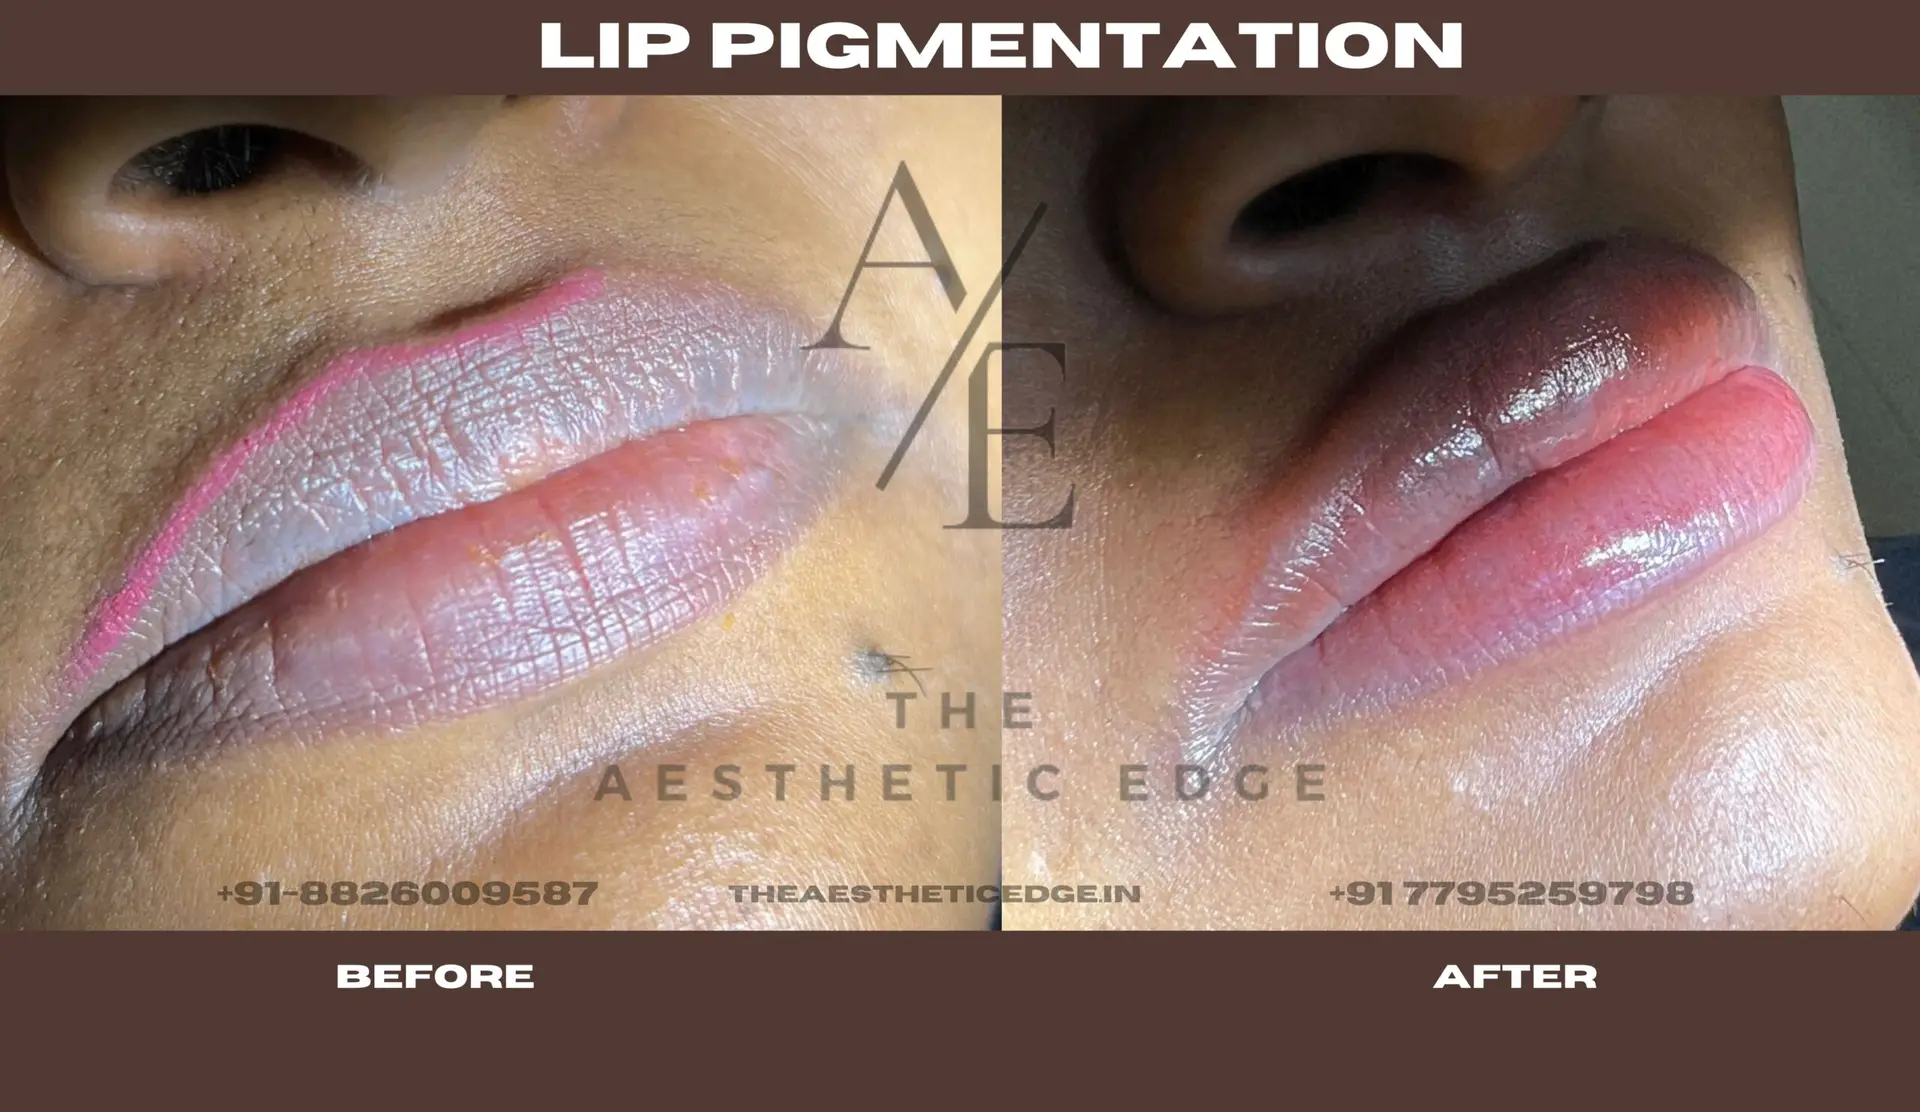 Lip pigmentation results